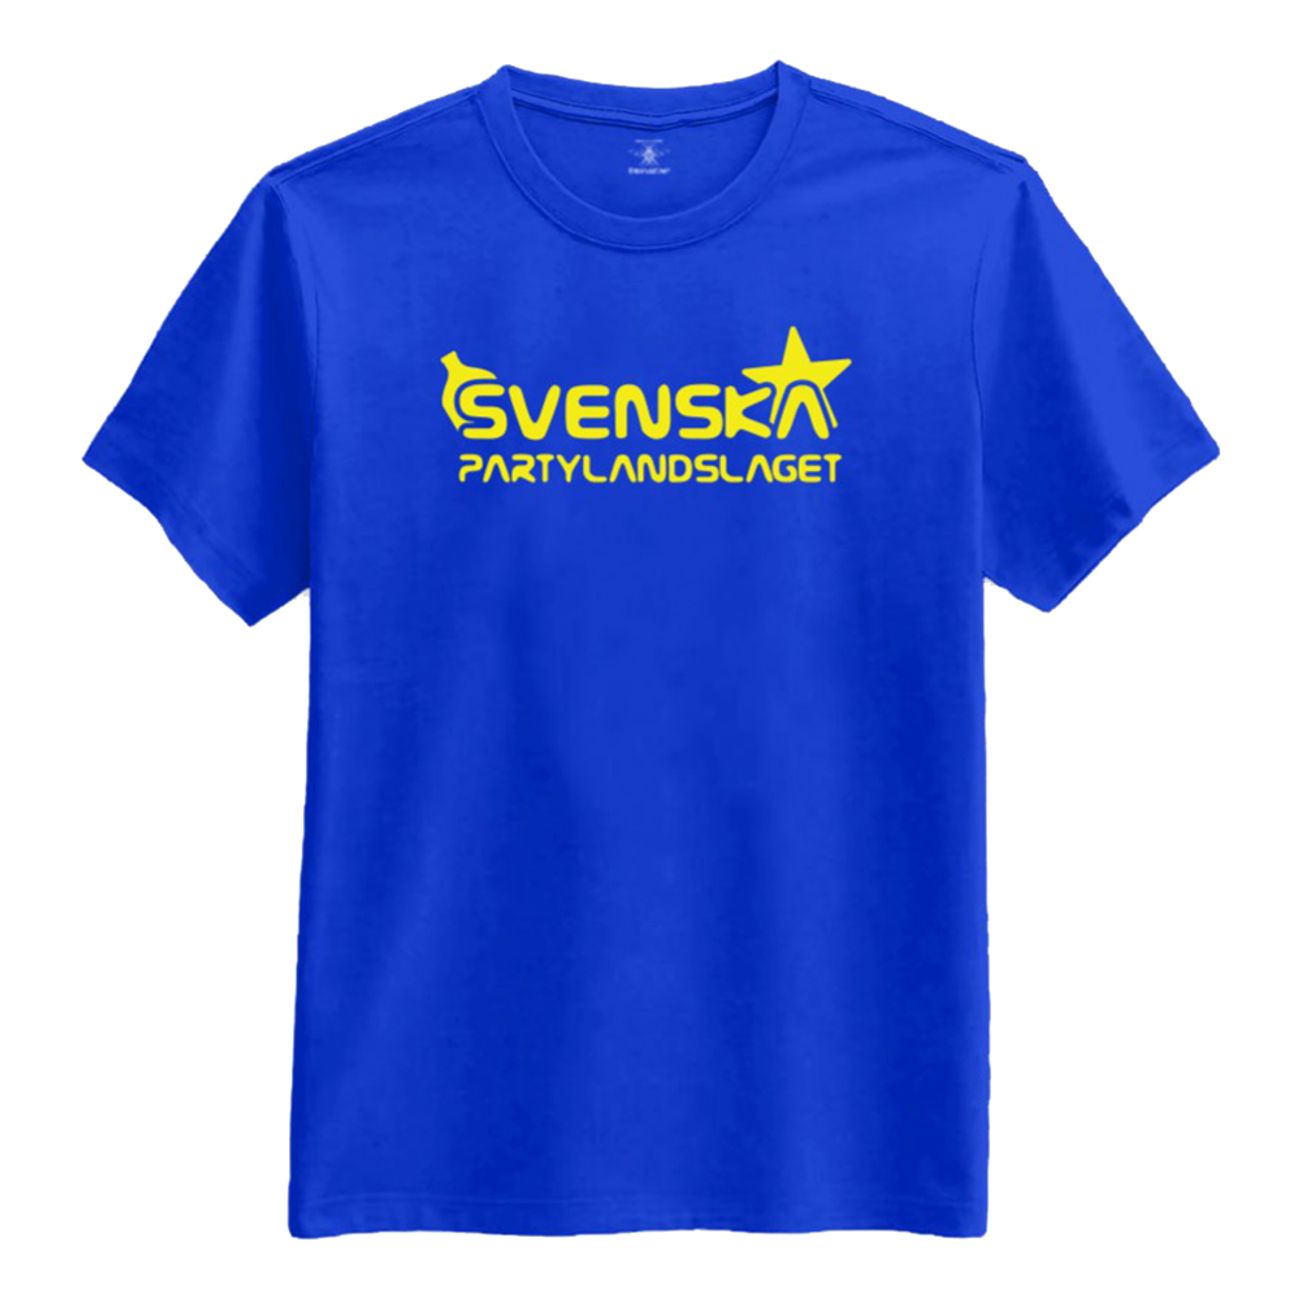 svenska-partylandslaget-t-shirt-bla-1